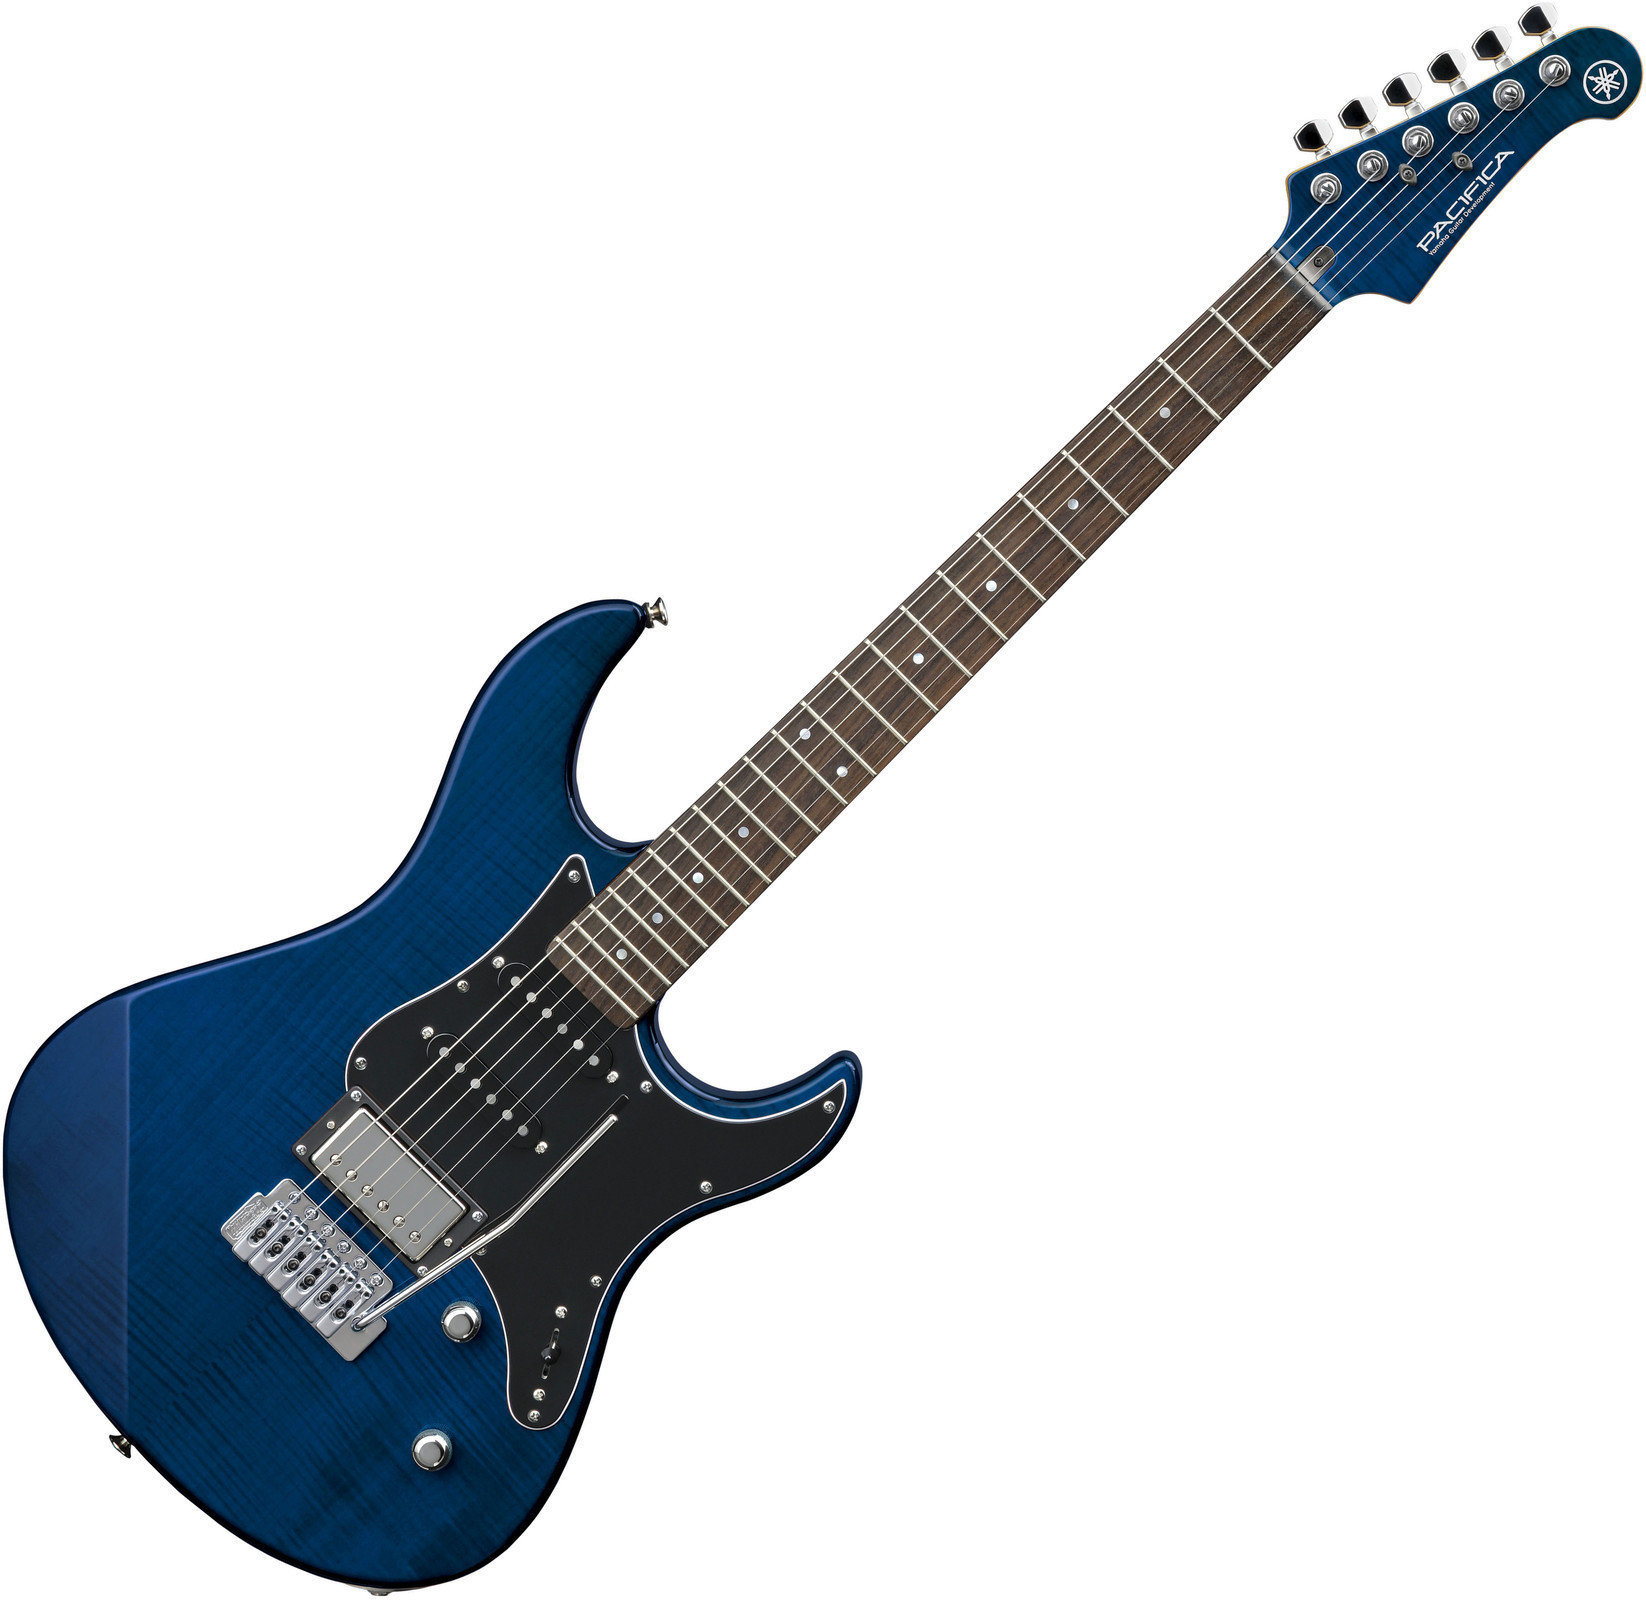 Električna kitara Yamaha Pacifica 612 V Flamed Maple Translucent BL